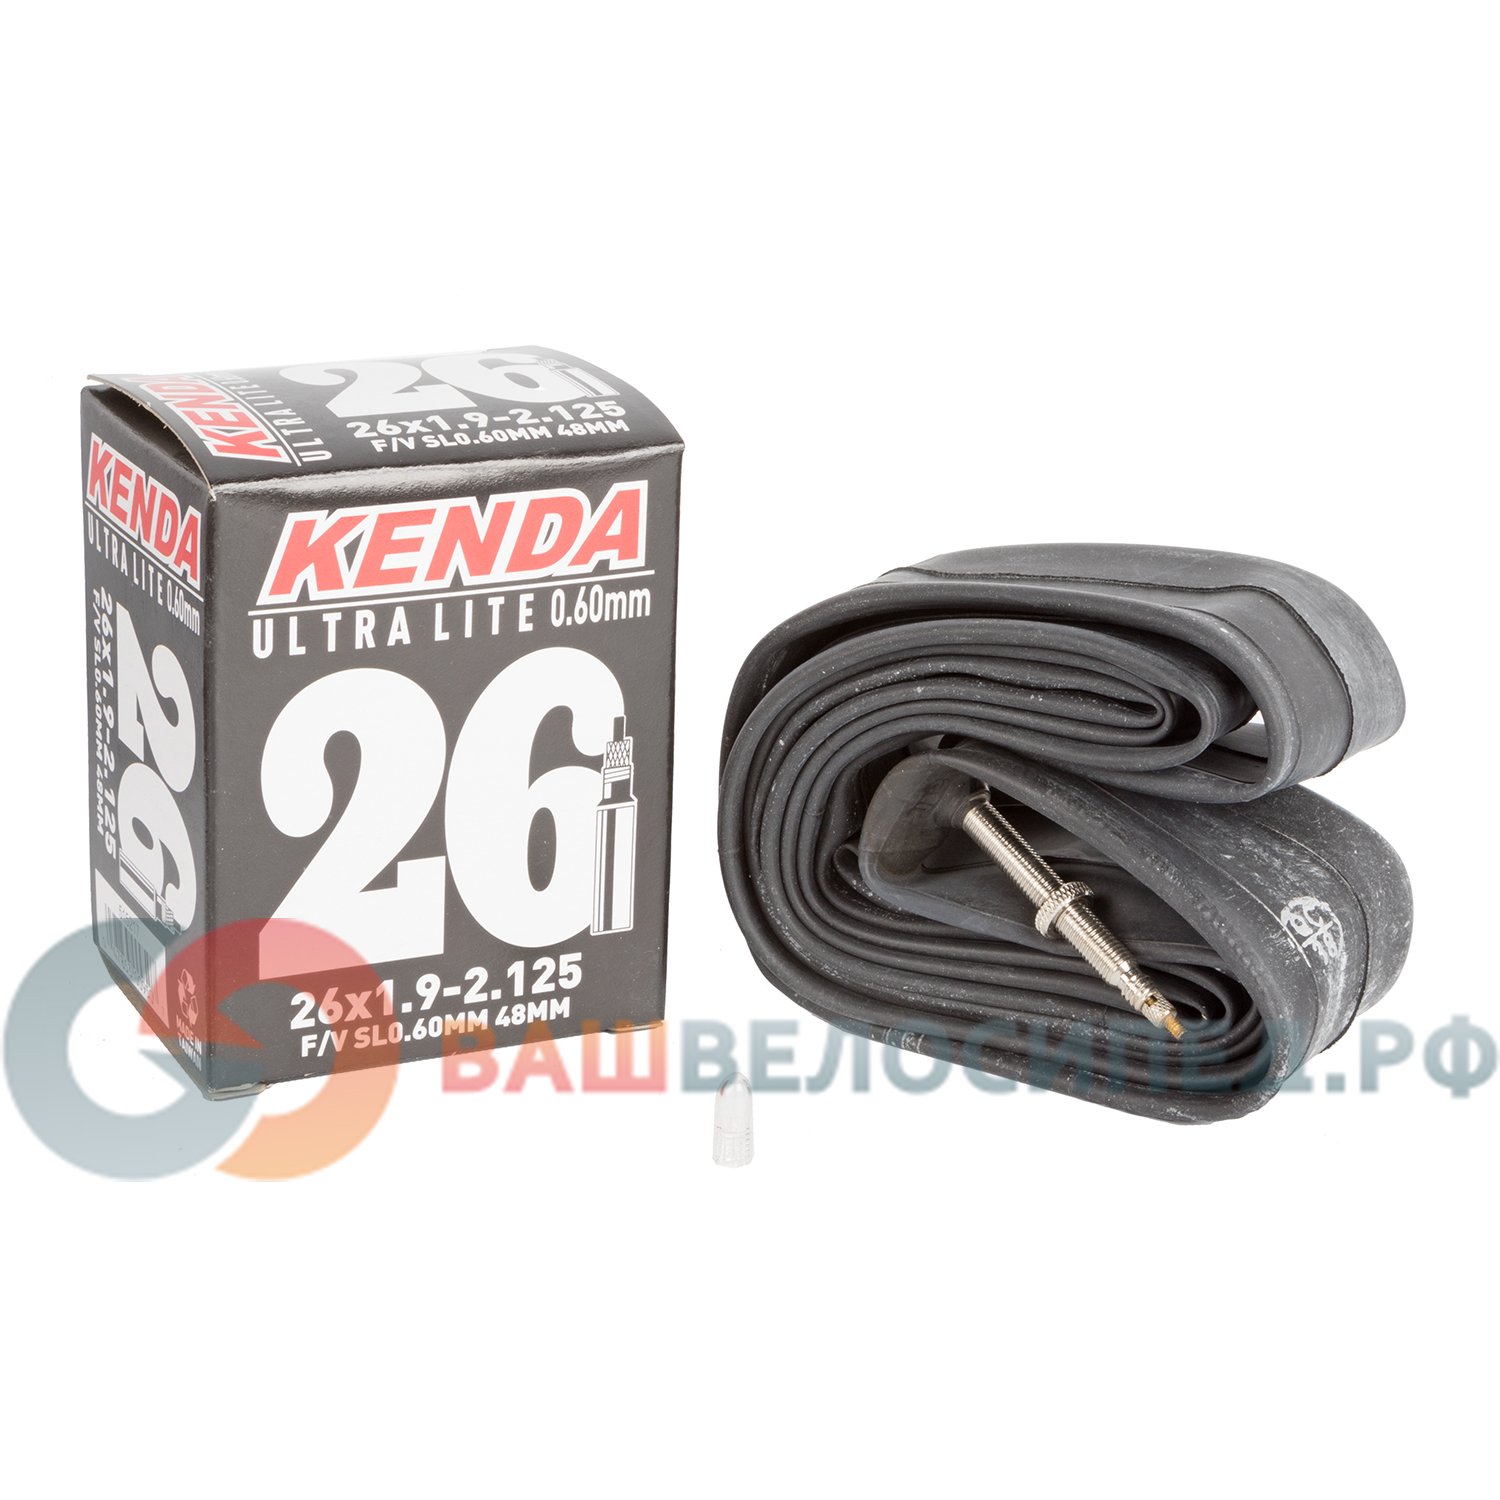 Камера для велосипеда KENDA 26х1.90-2.125 (47/57-559) Ultralite спортниппель 48мм 5-515217